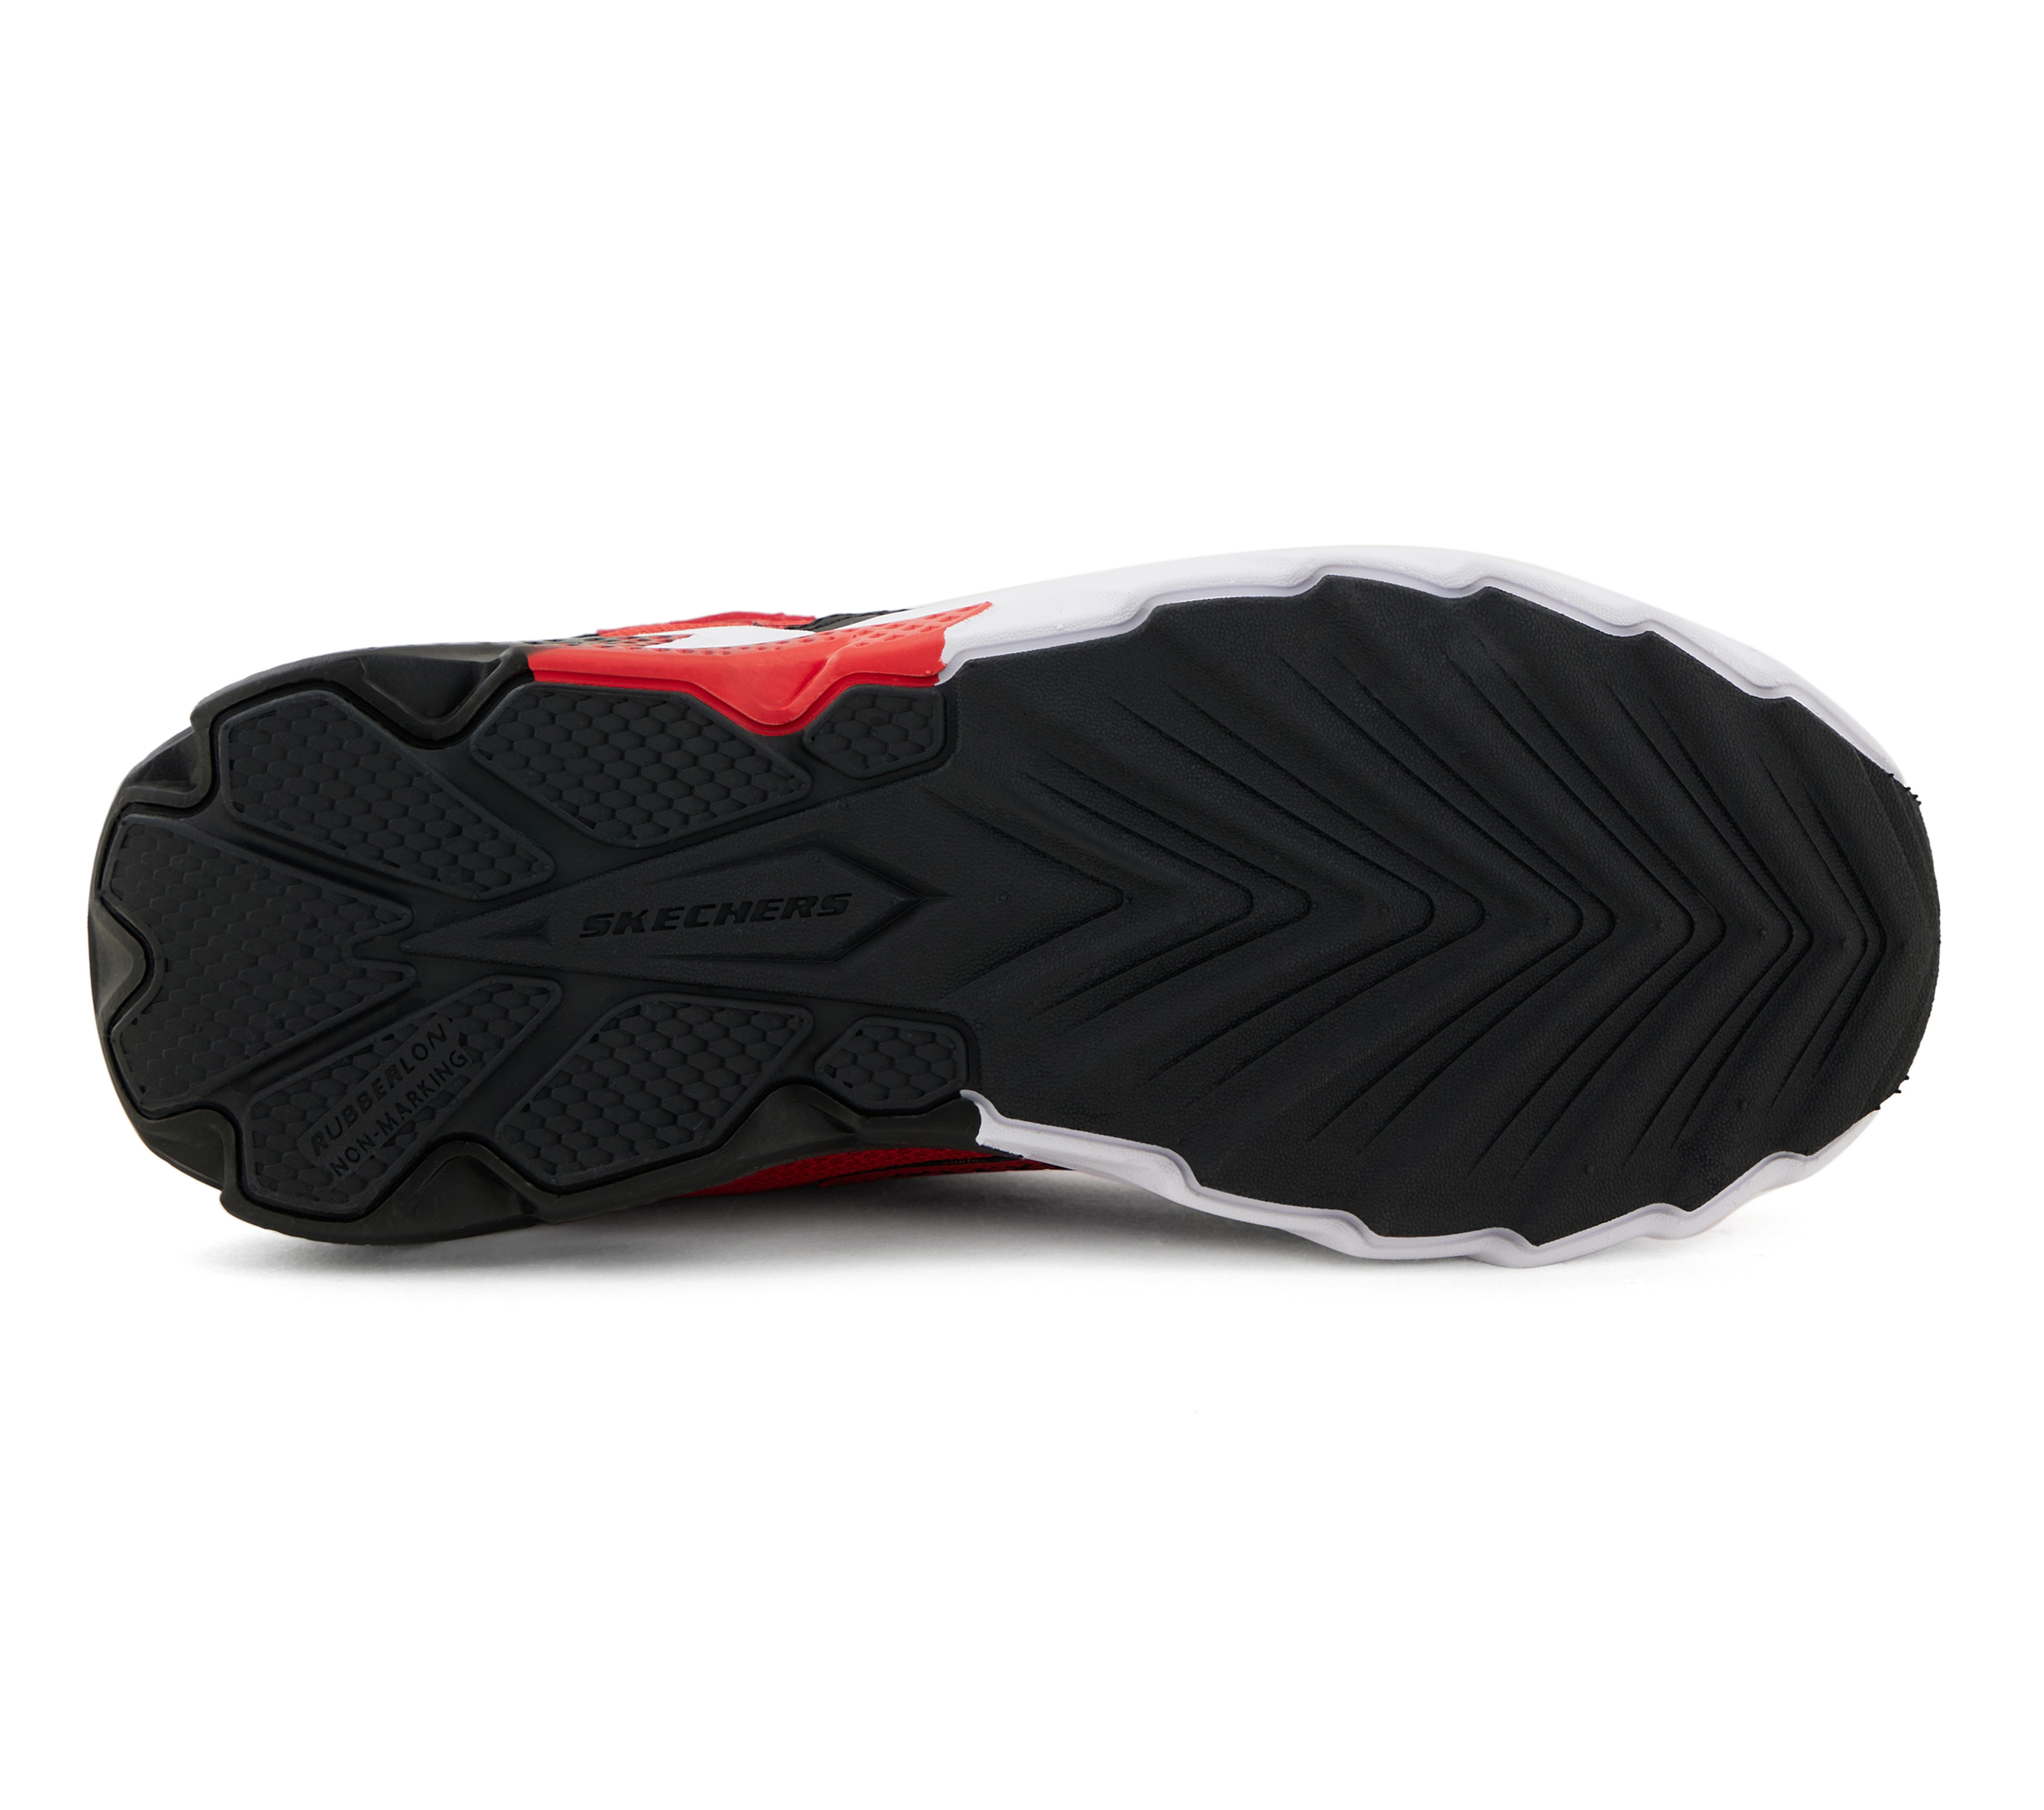 ELITE SPORT TREAD, RED/BLACK Footwear Bottom View